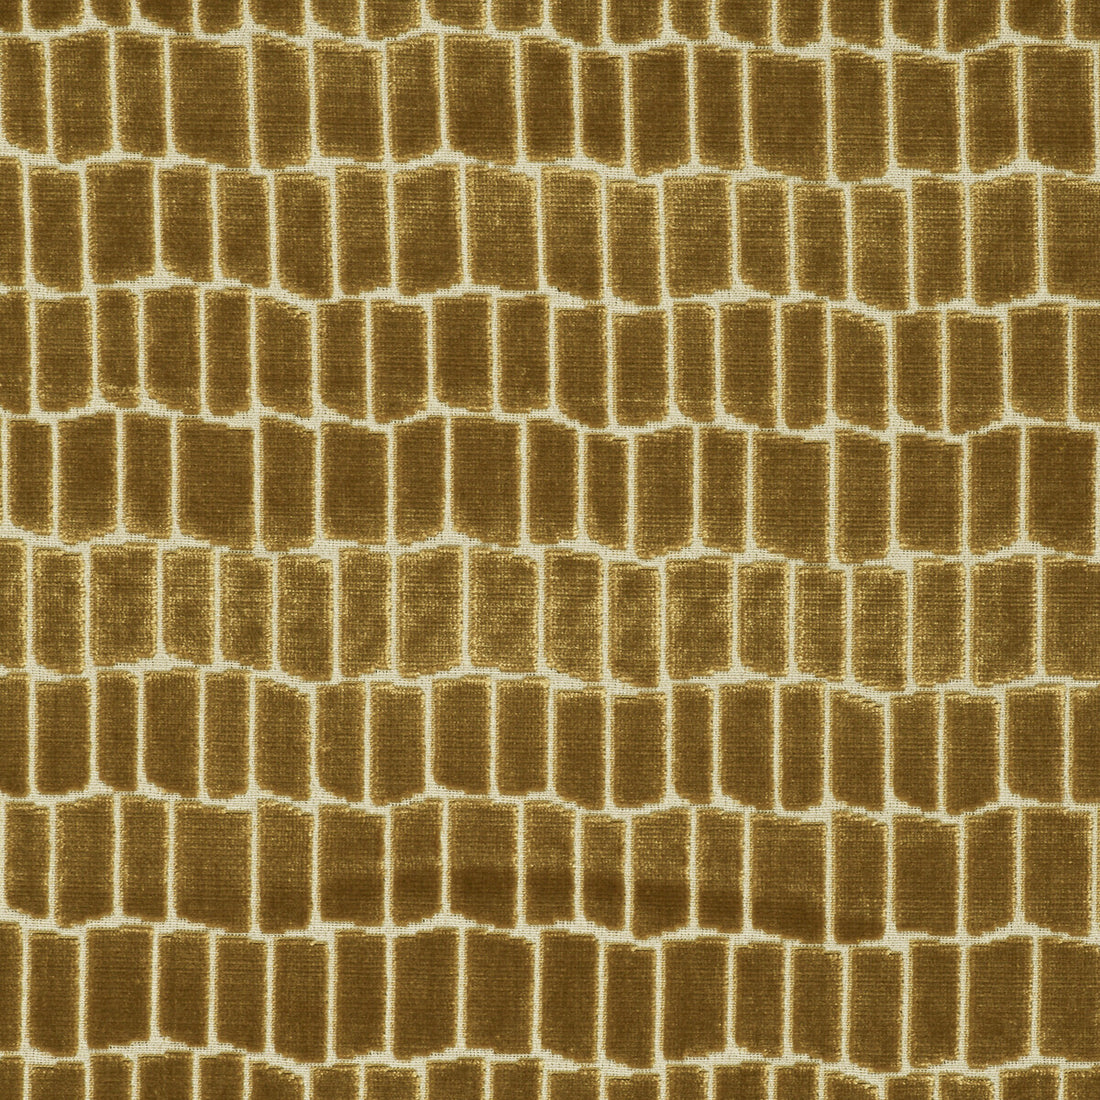 Maximo fabric in oro color - pattern LCT1015.007.0 - by Gaston y Daniela in the Lorenzo Castillo V collection